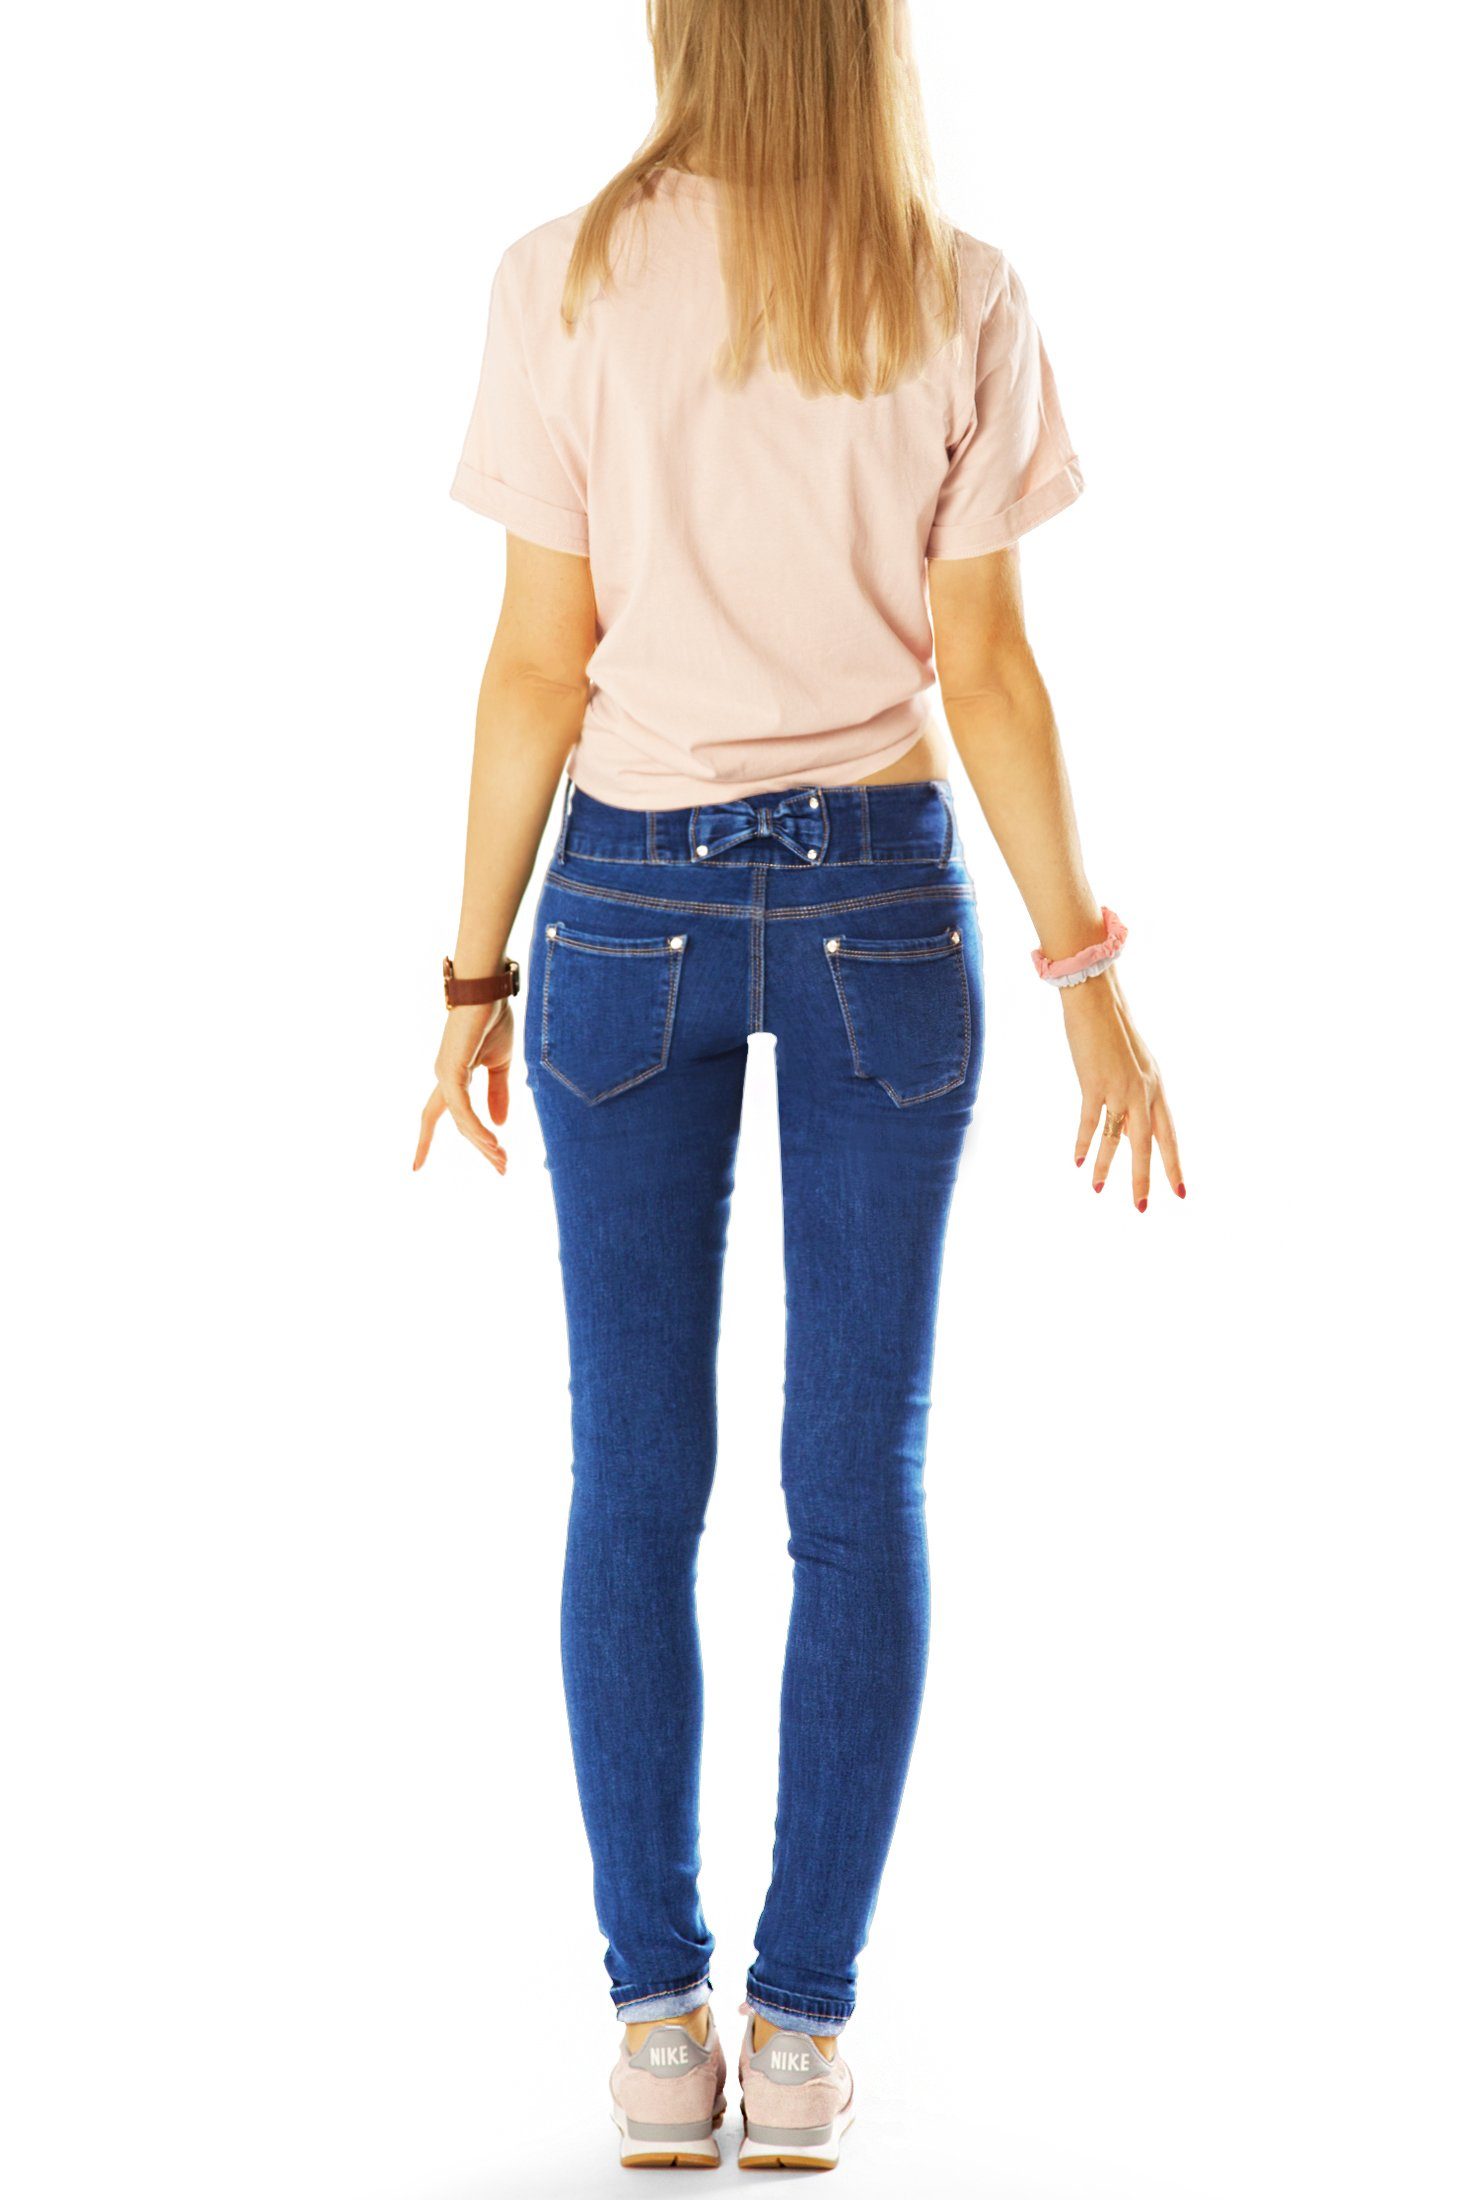 Hose Waist - Hüftjeans styled - Röhrenjeans 5-Pocket-Style Low Low-rise-Jeans be j3e-1 Damen Skinny